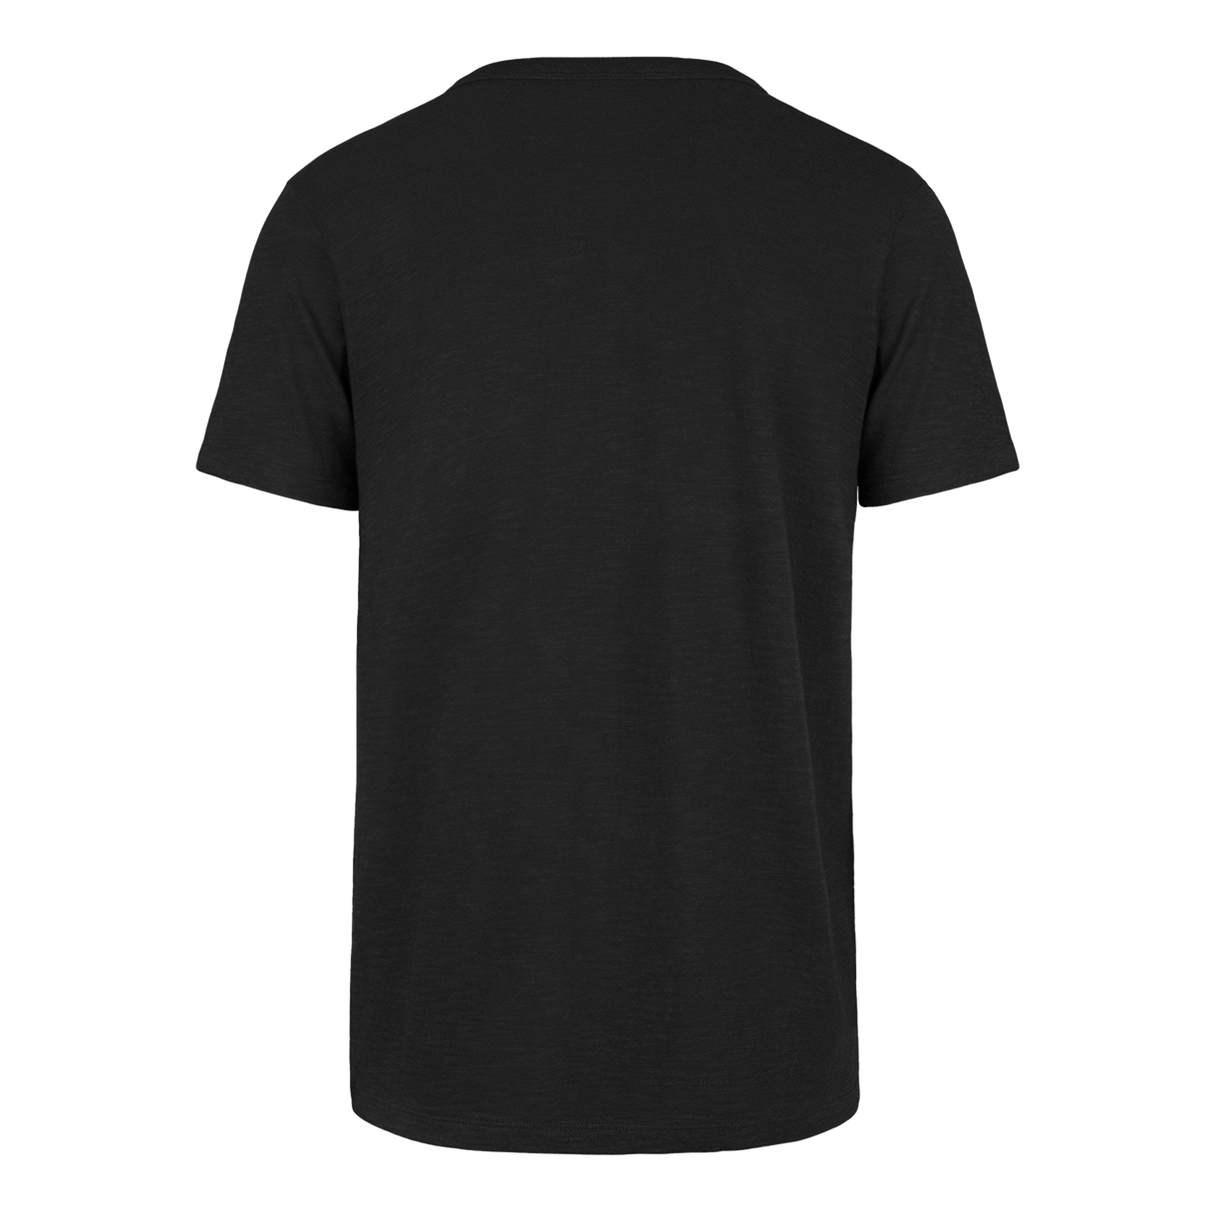 Baltimore Ravens Crown Men's Short Sleeve T-Shirt